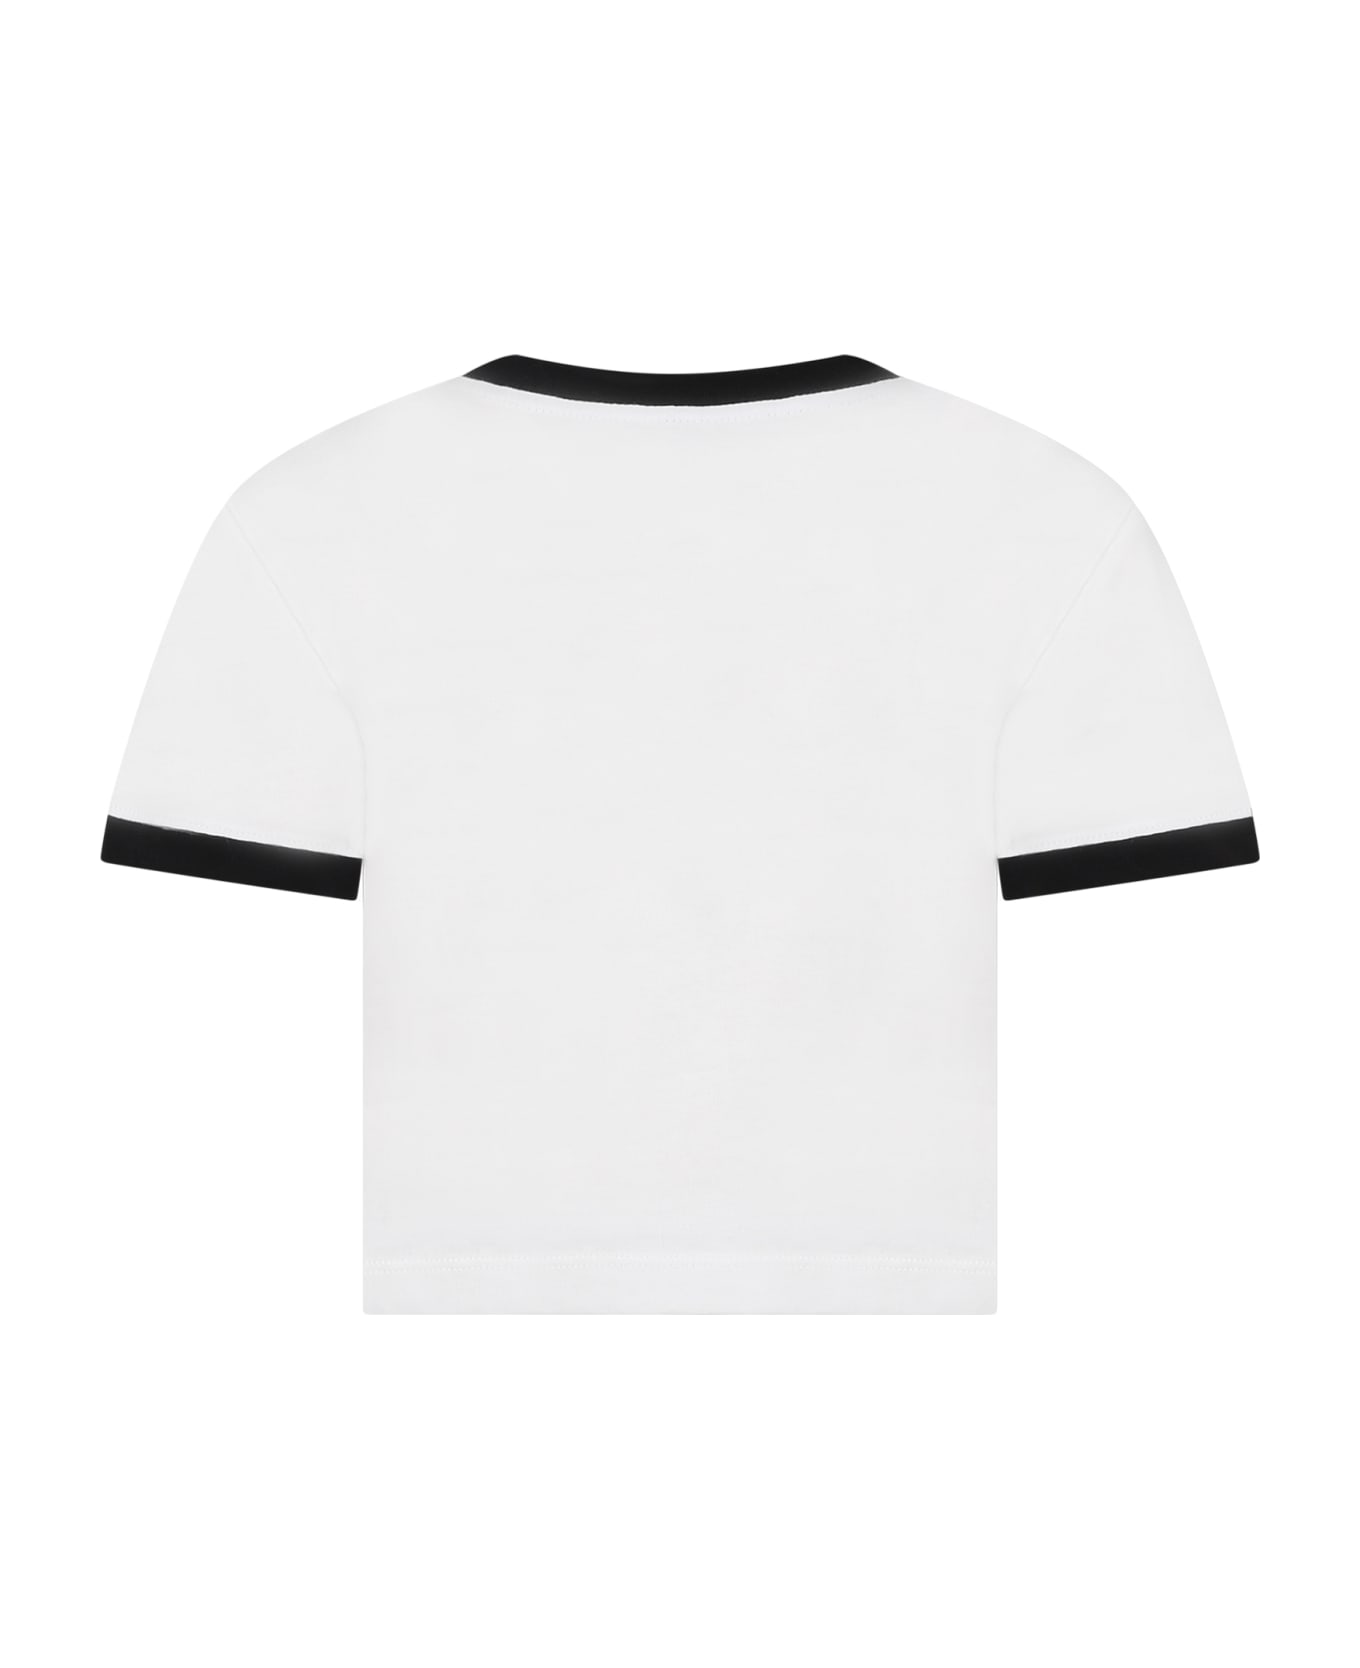 Nike White T-shirt For Girl With Logo - White